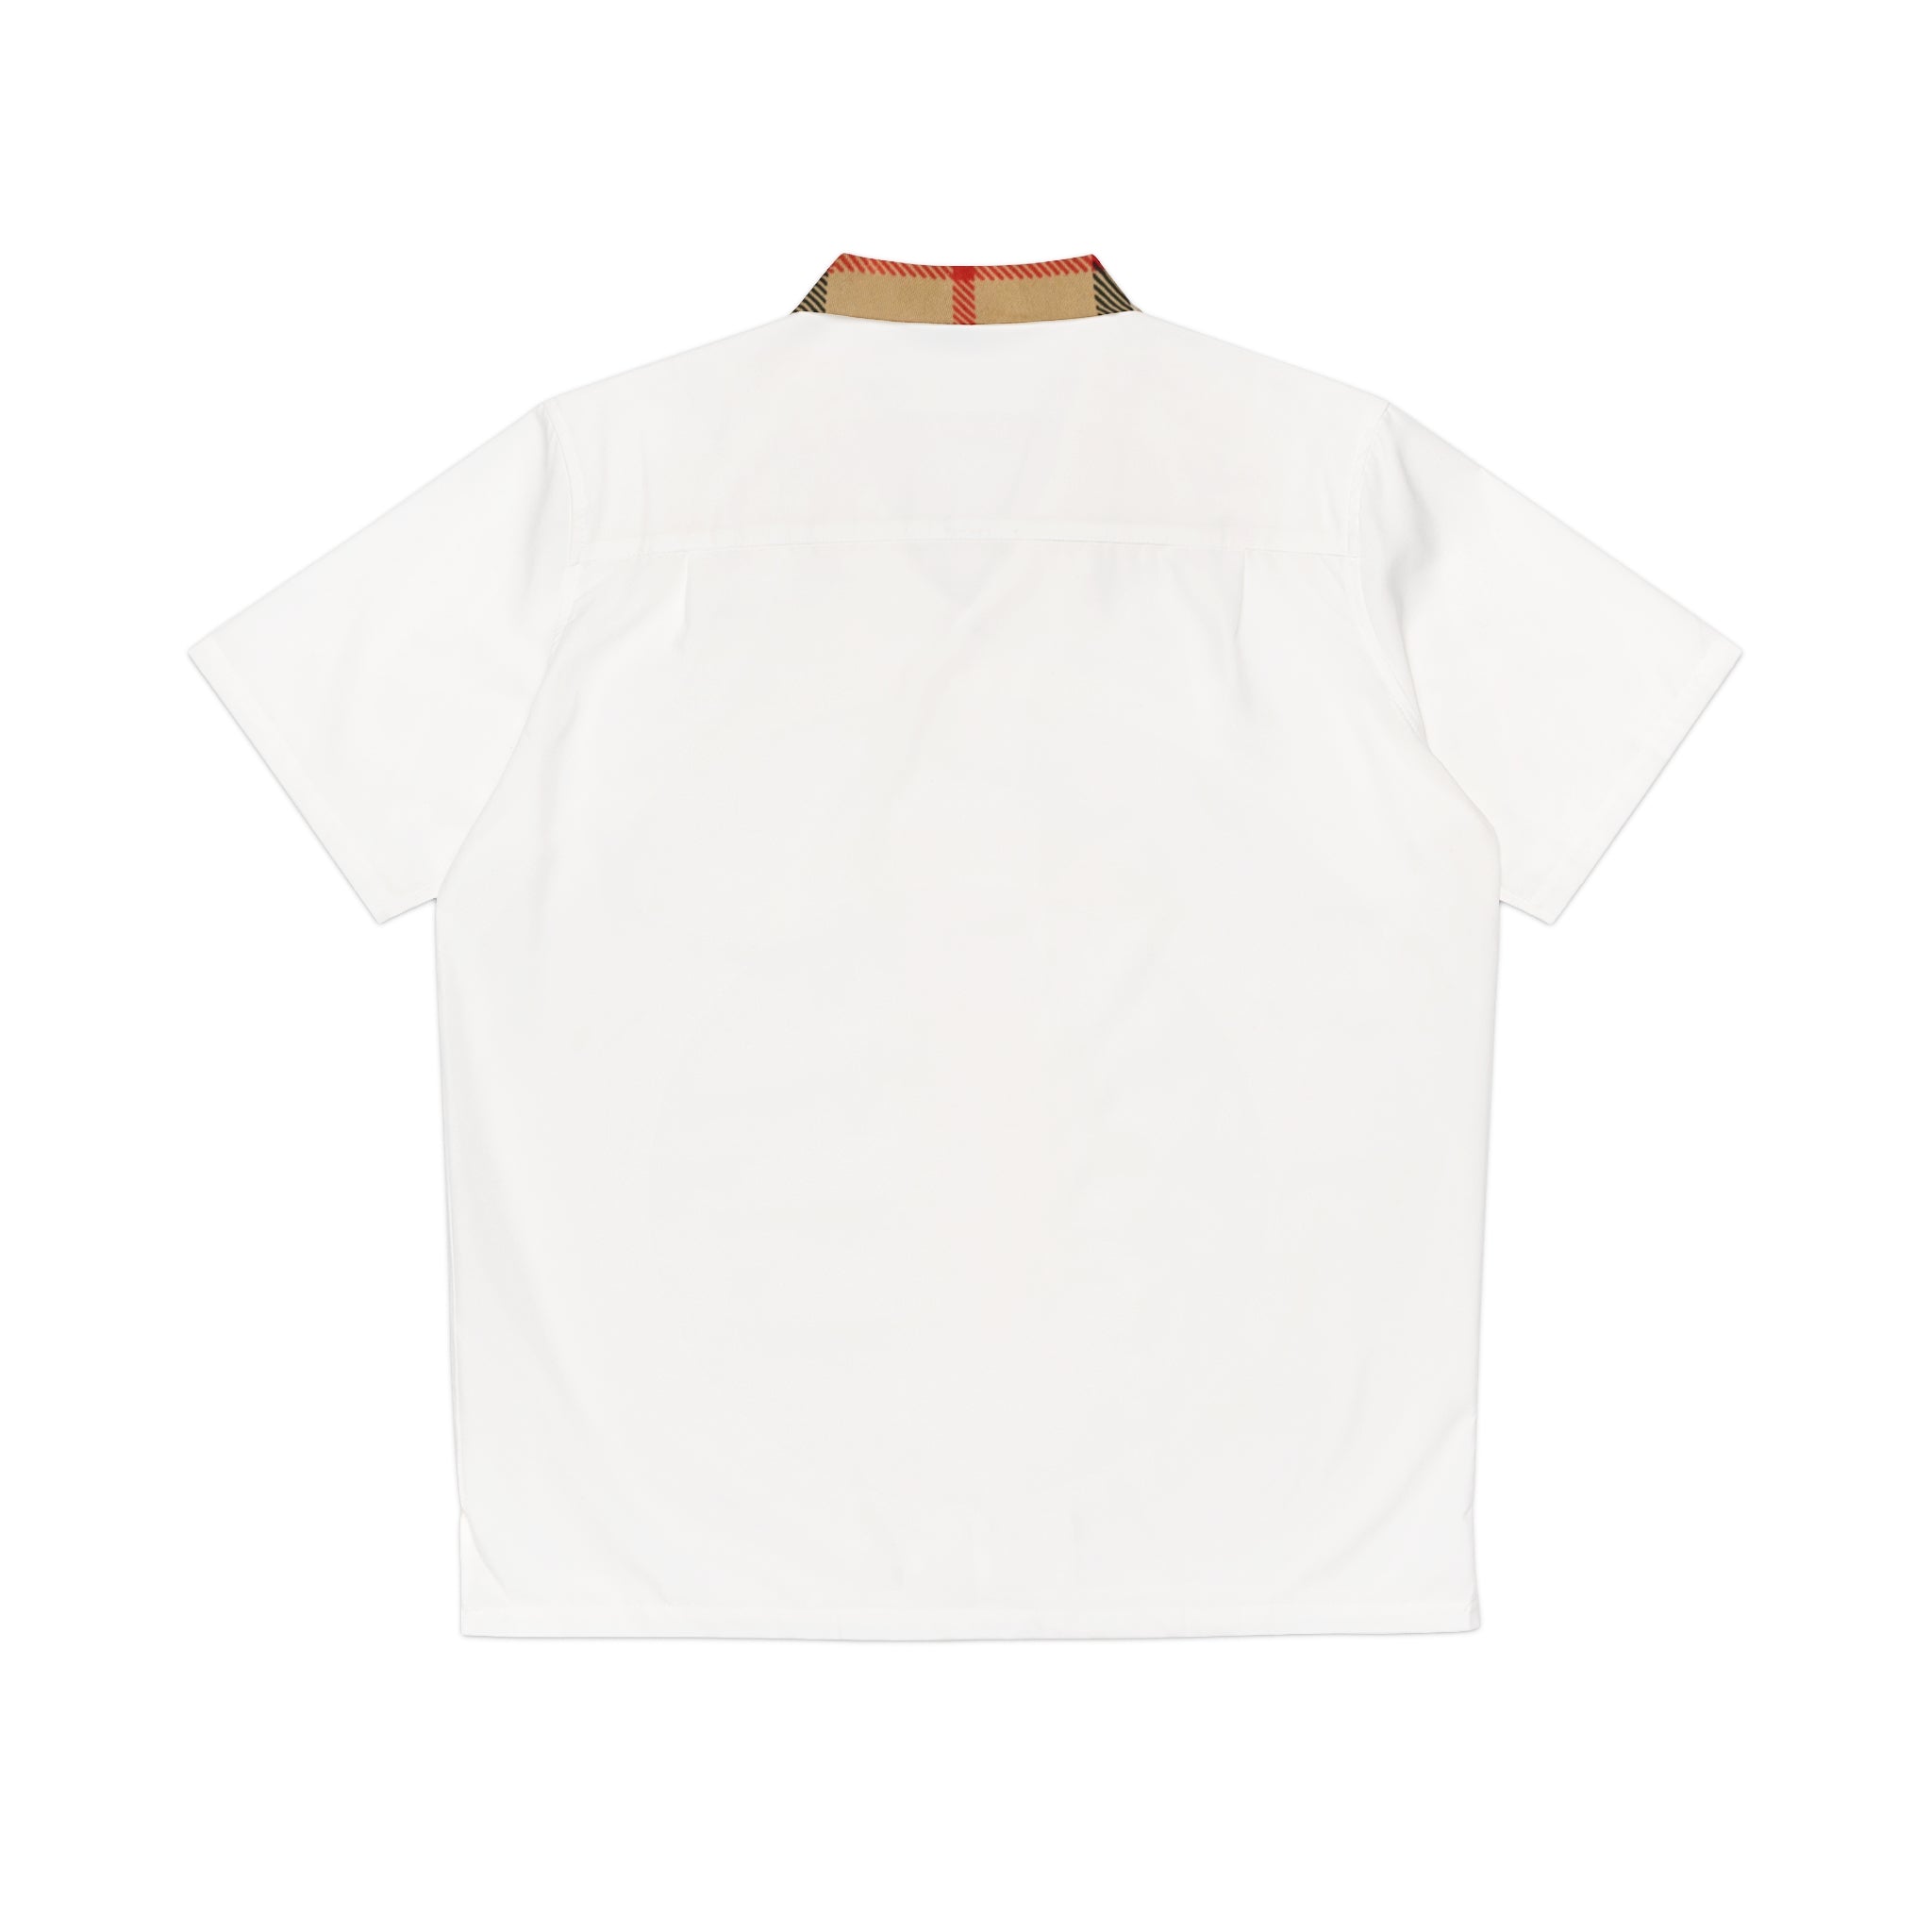  Groove Collection in Dark Plaid Left Pattern White Unisex Gender Neutral Button Up Shirt Button Up Shirt